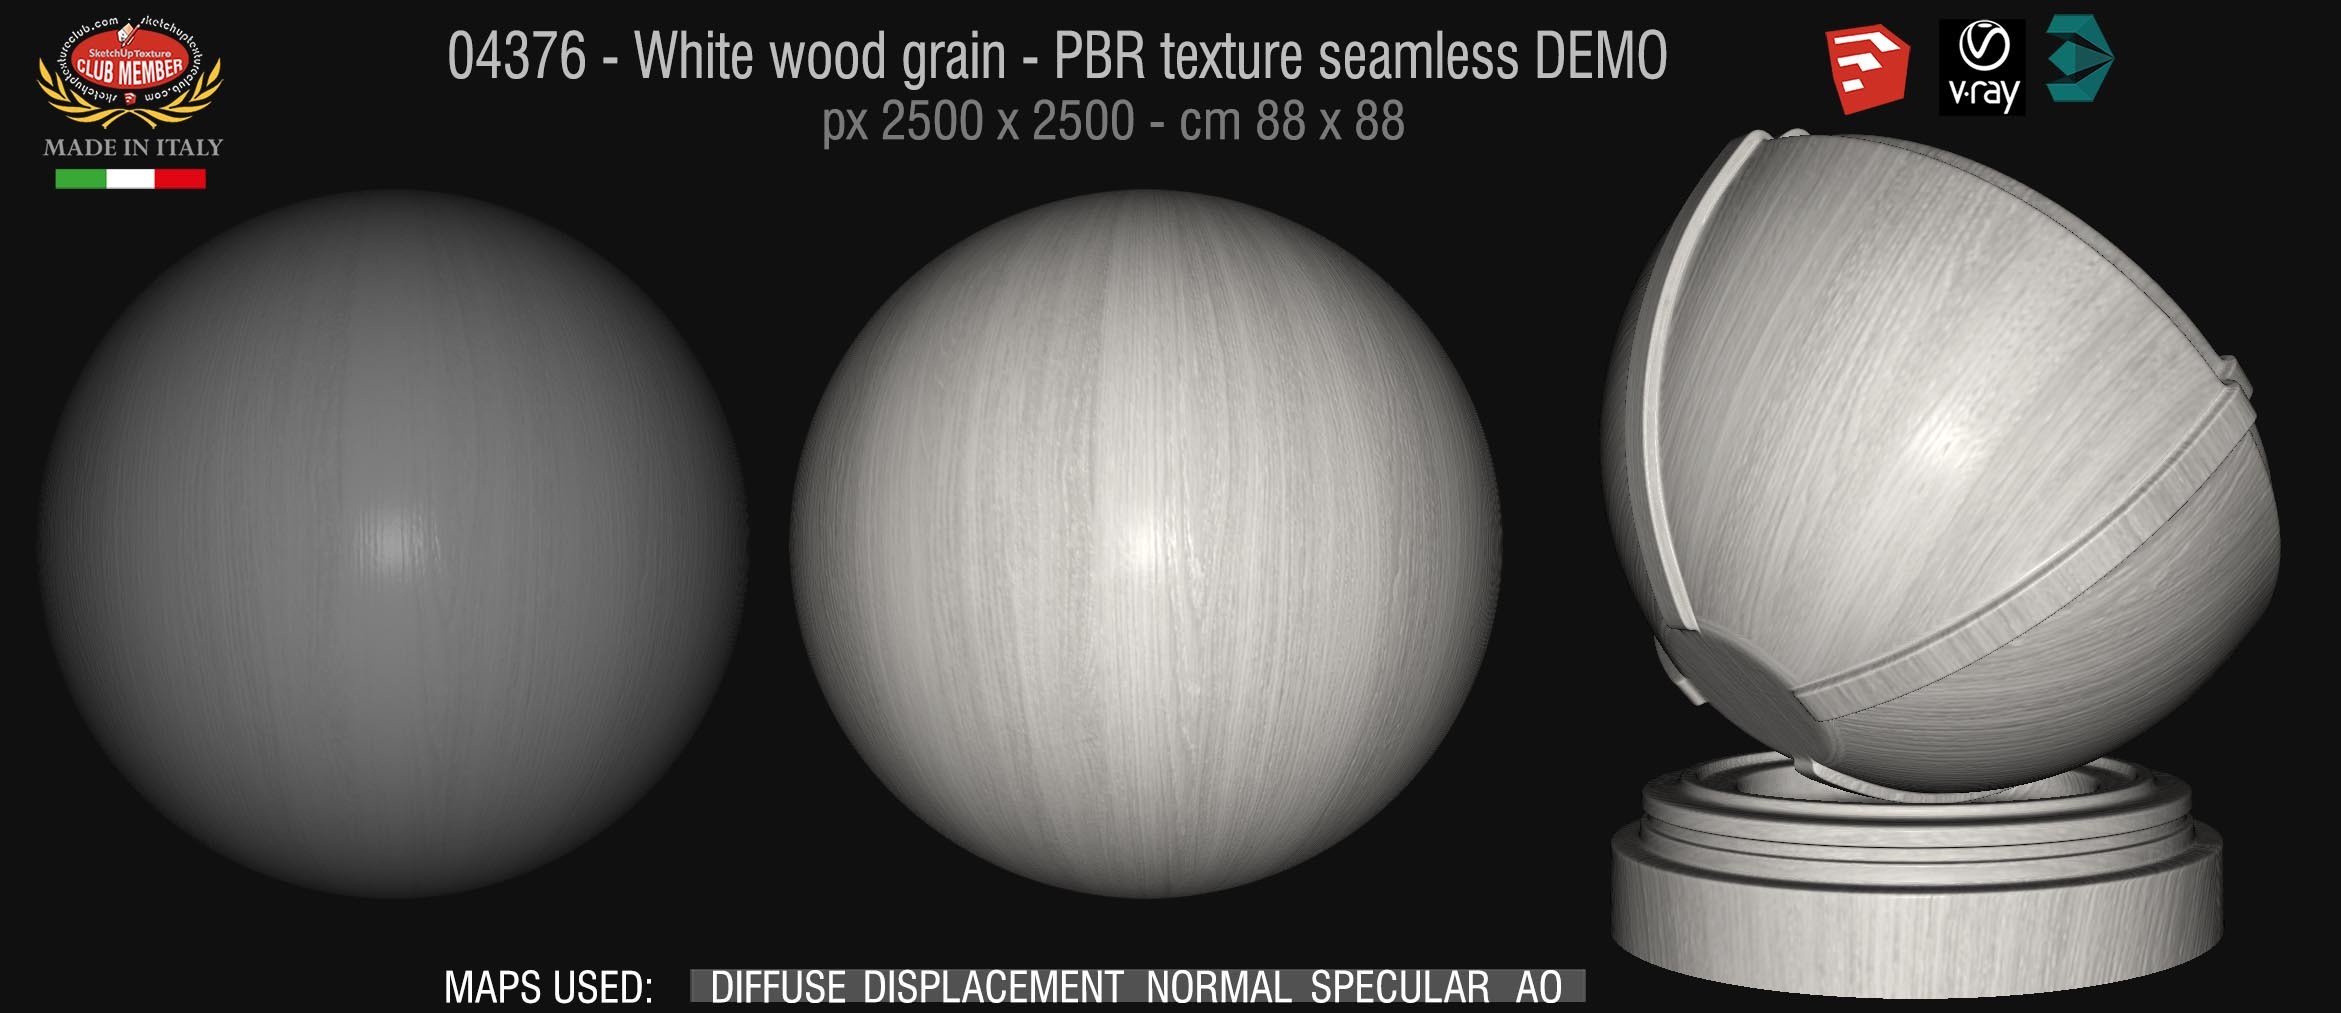 04376 White wood grain - PBR texture seamless DEMO